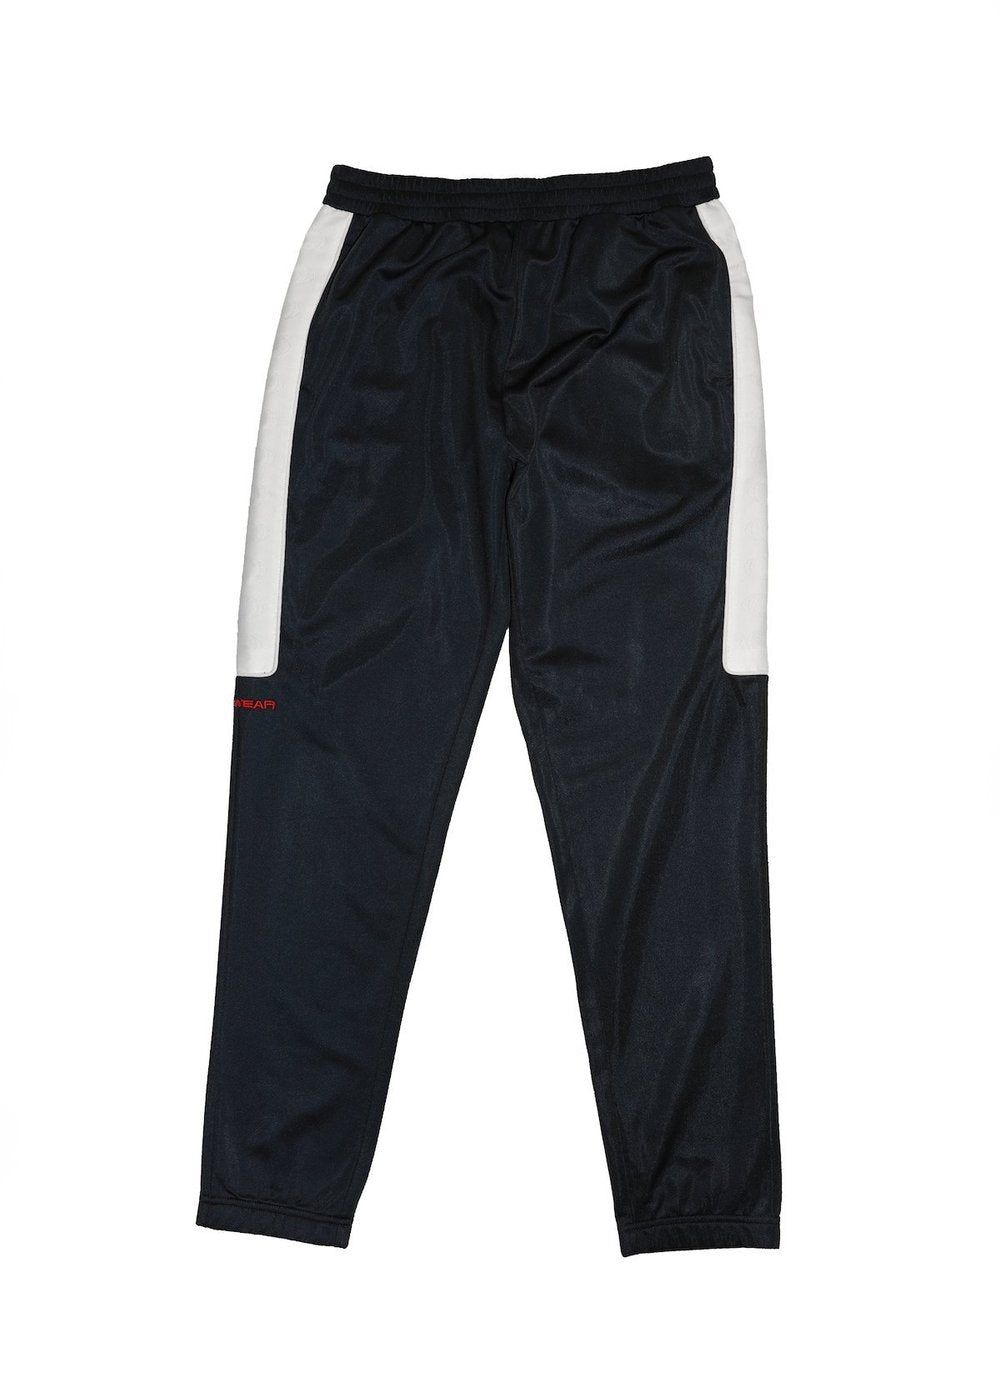 Wu Wear - Re United Men's Track Pants, Navy/White